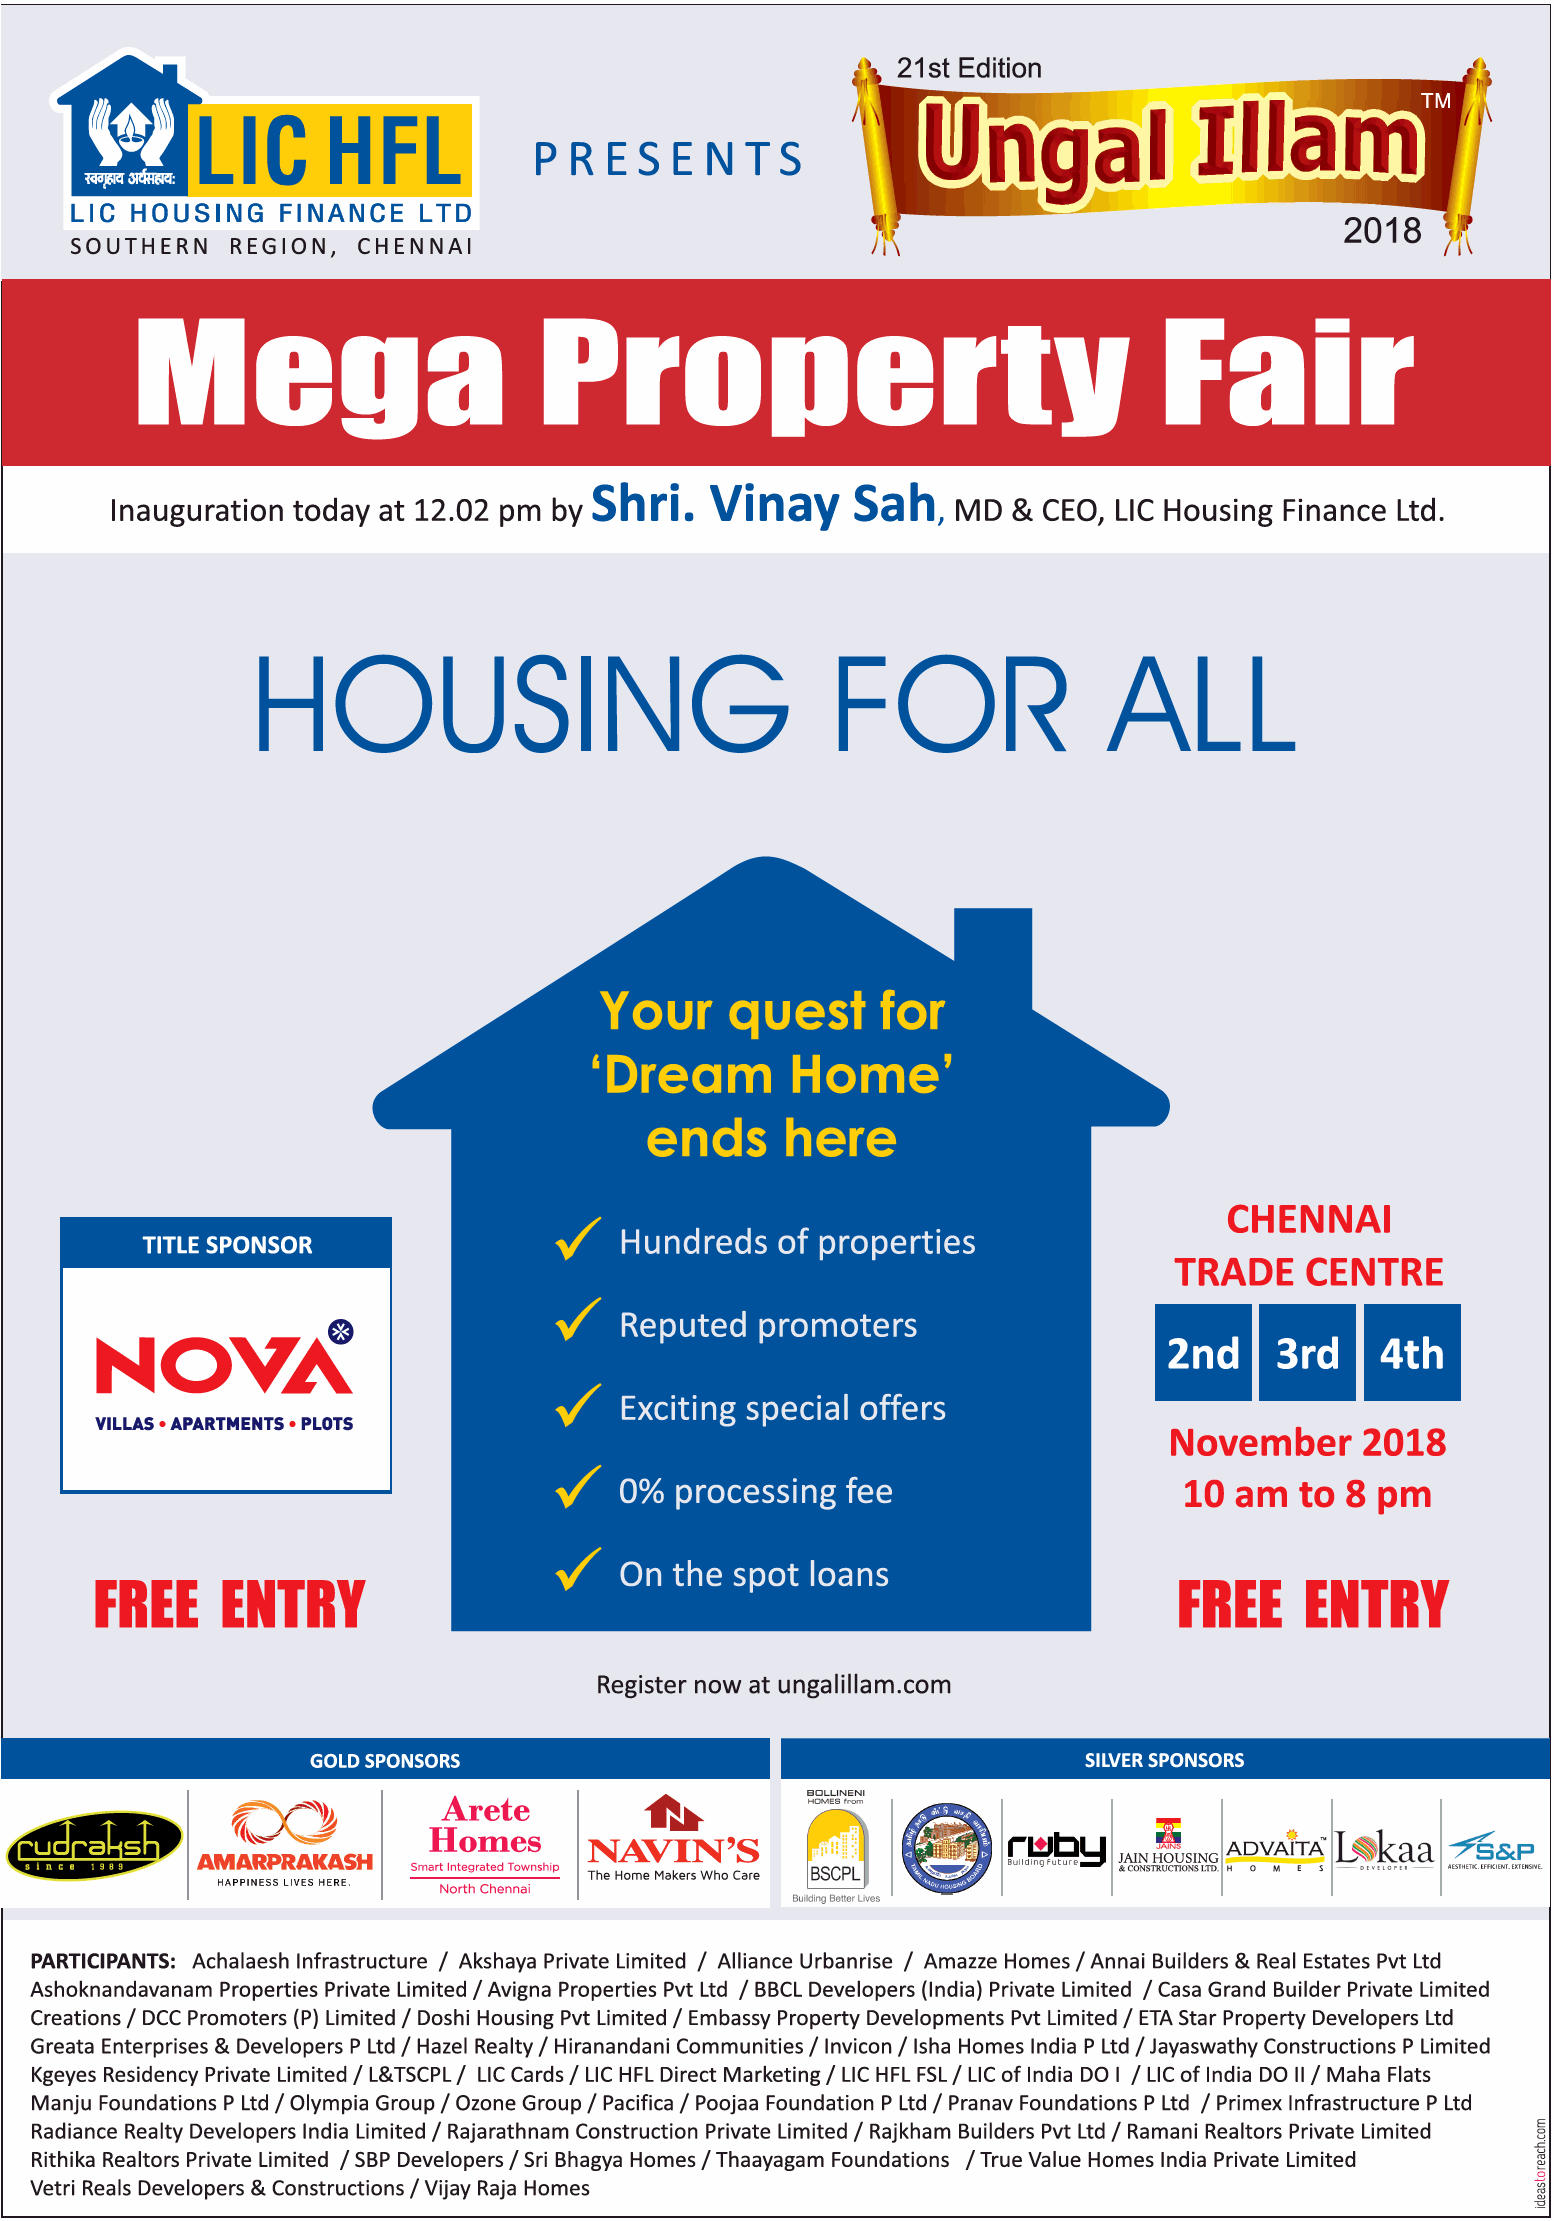 Presenting Mega Property Fair 2018 in Chennai Update